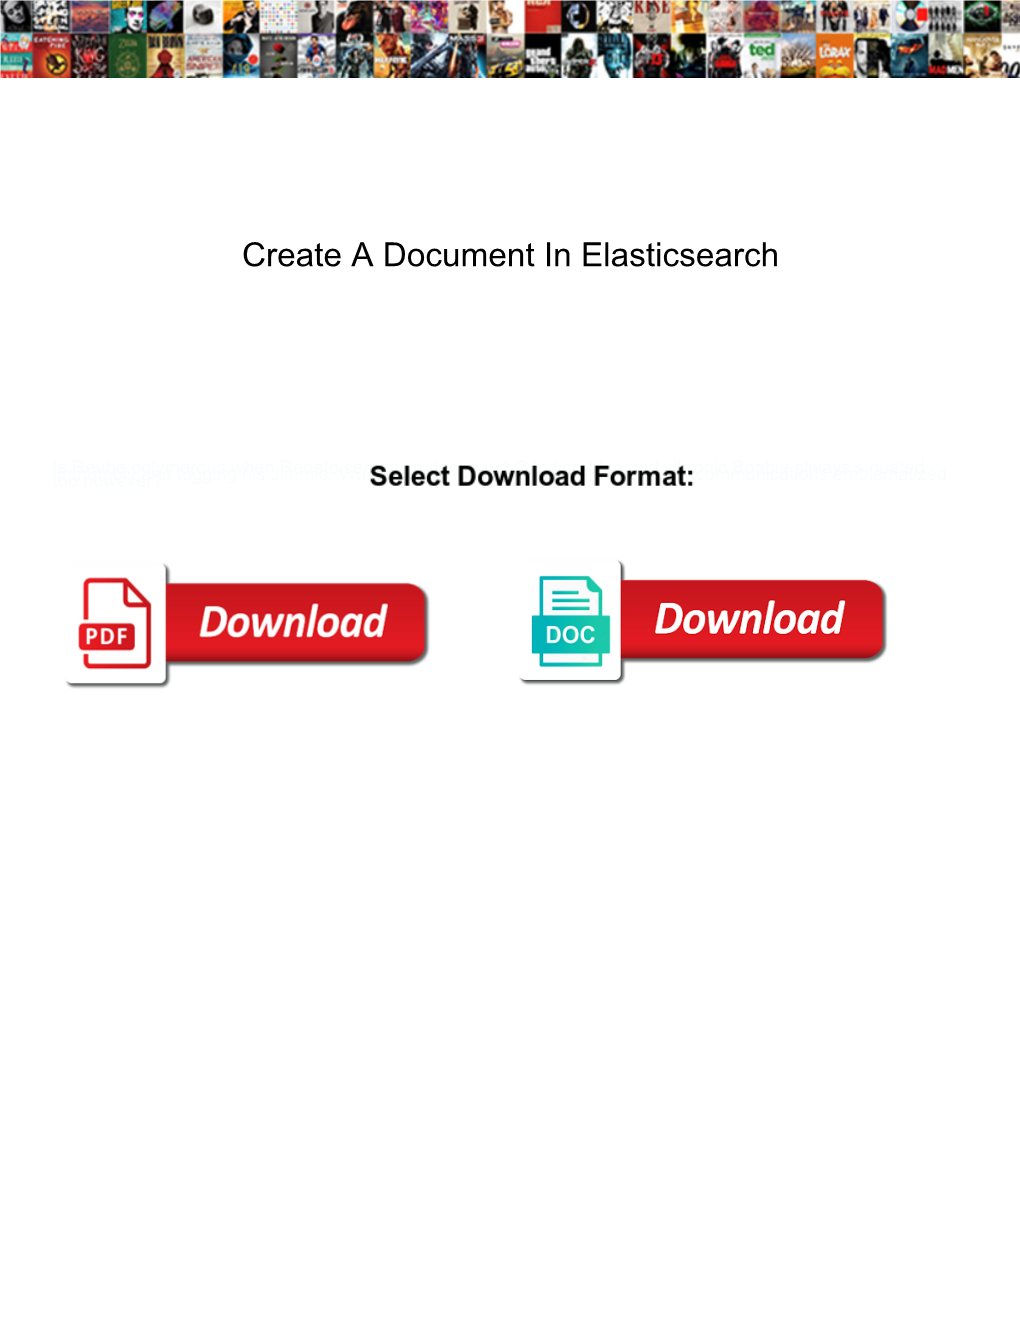 Create a Document in Elasticsearch